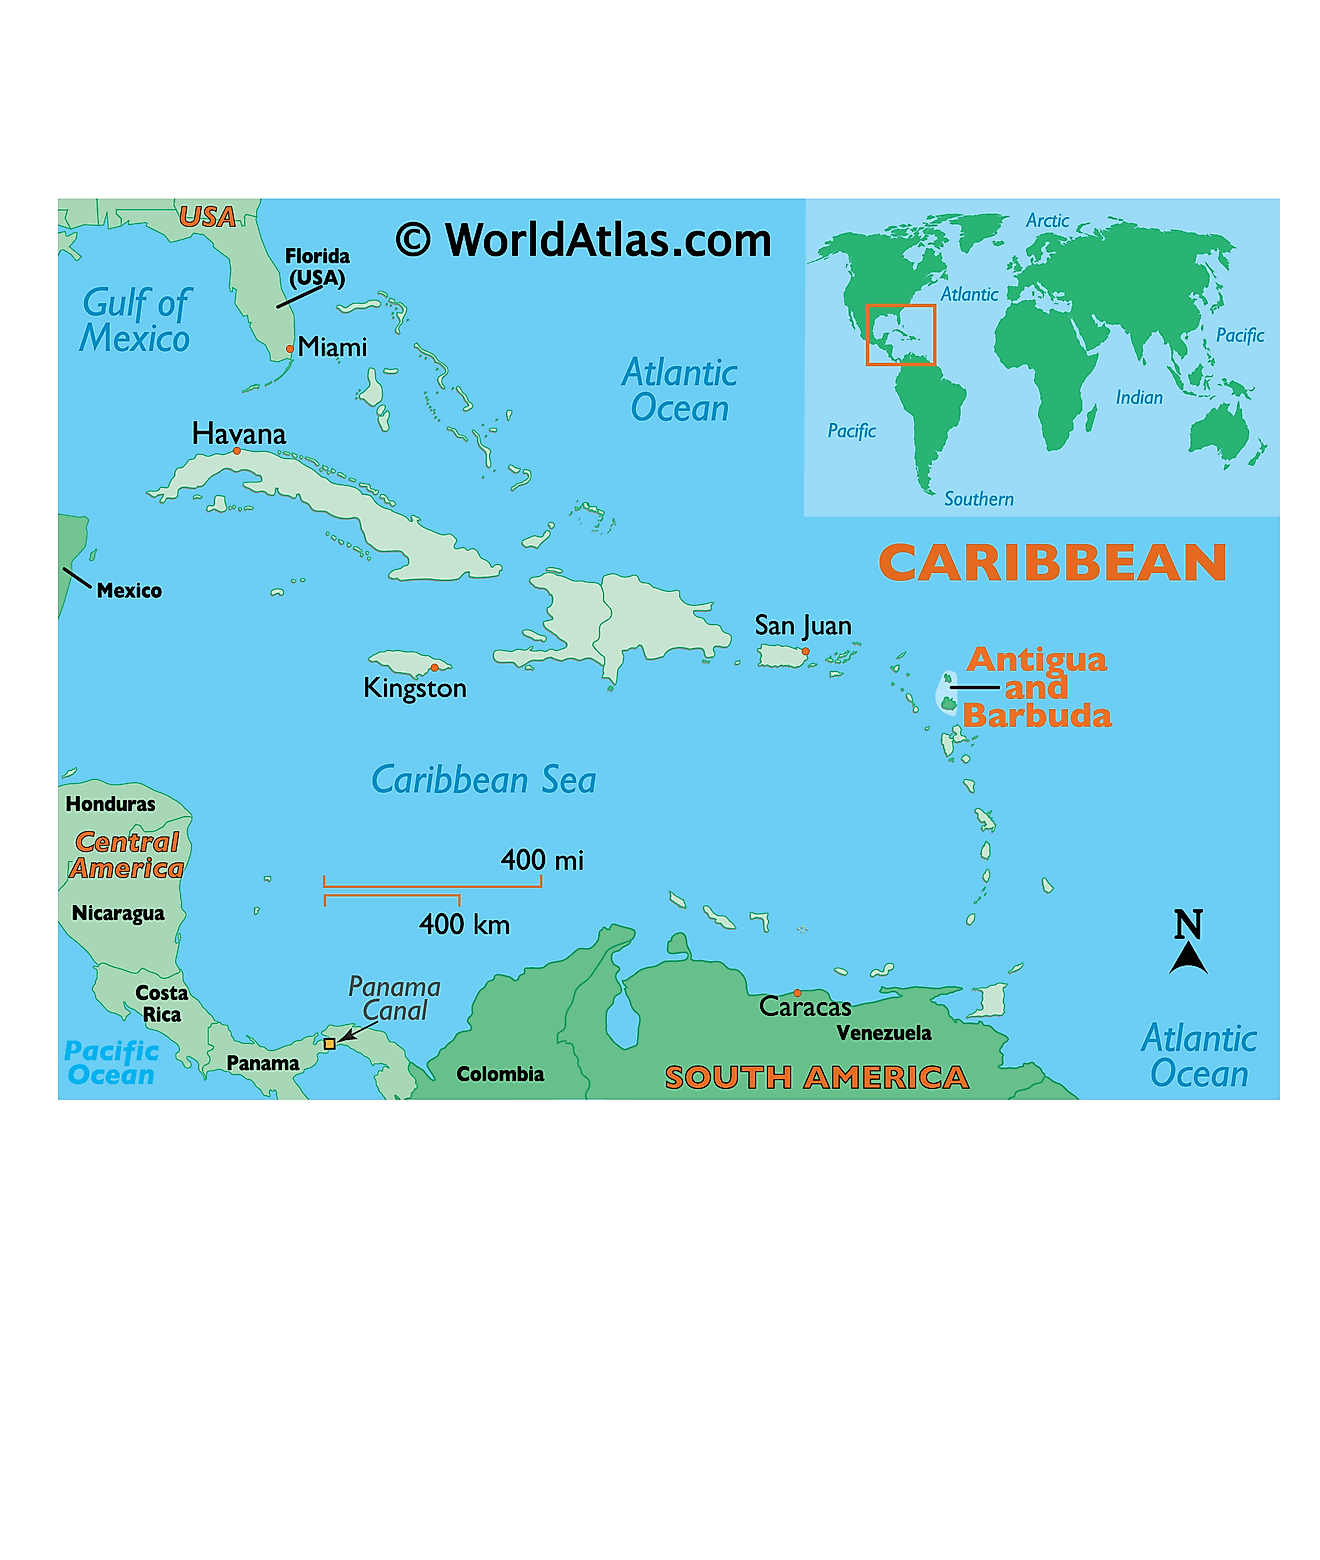 Where is Antigua and Barbuda?